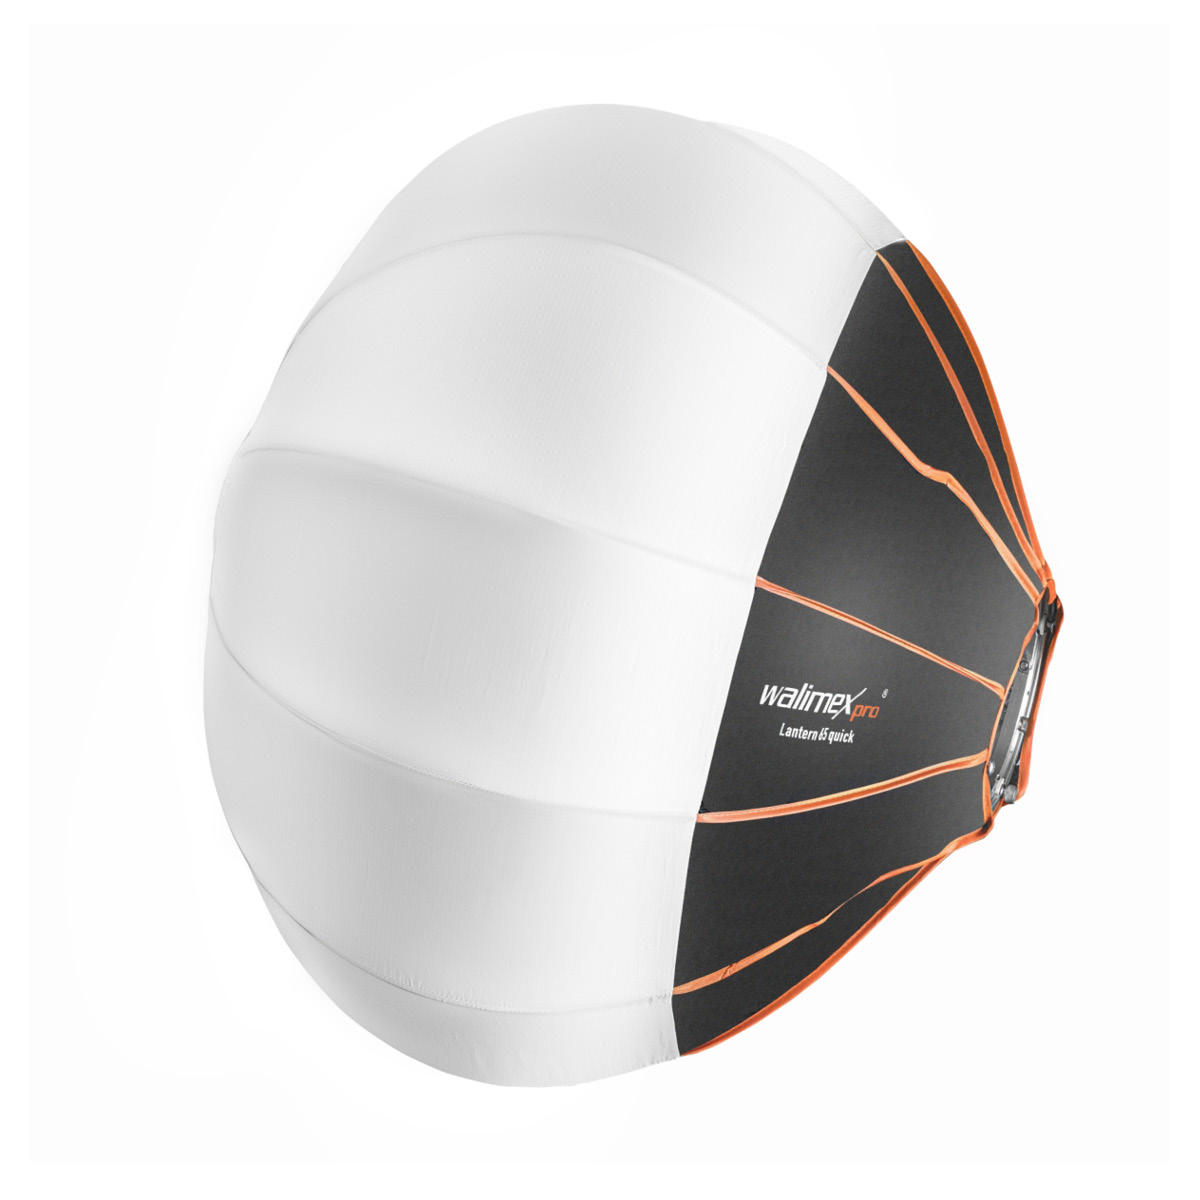 Walimex pro 360° Ambient Light Softbox 65 Profoto